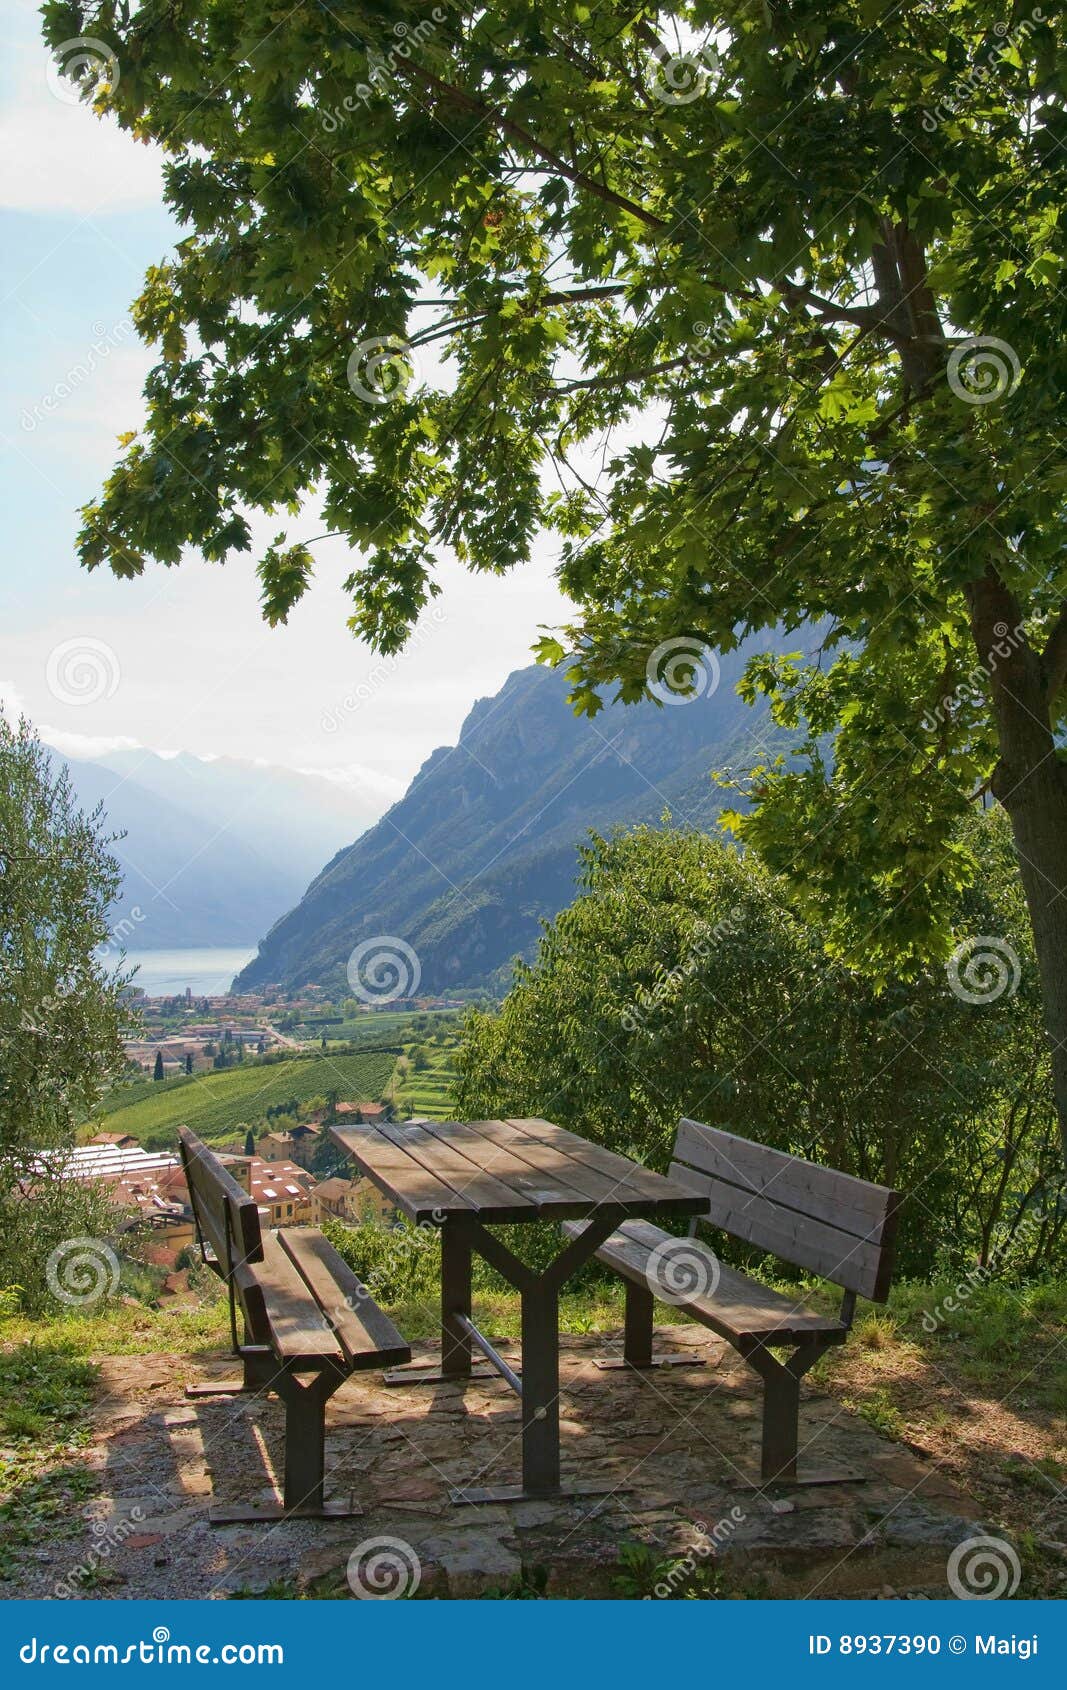 Picnic table under tree stock photo. Image of landscape 